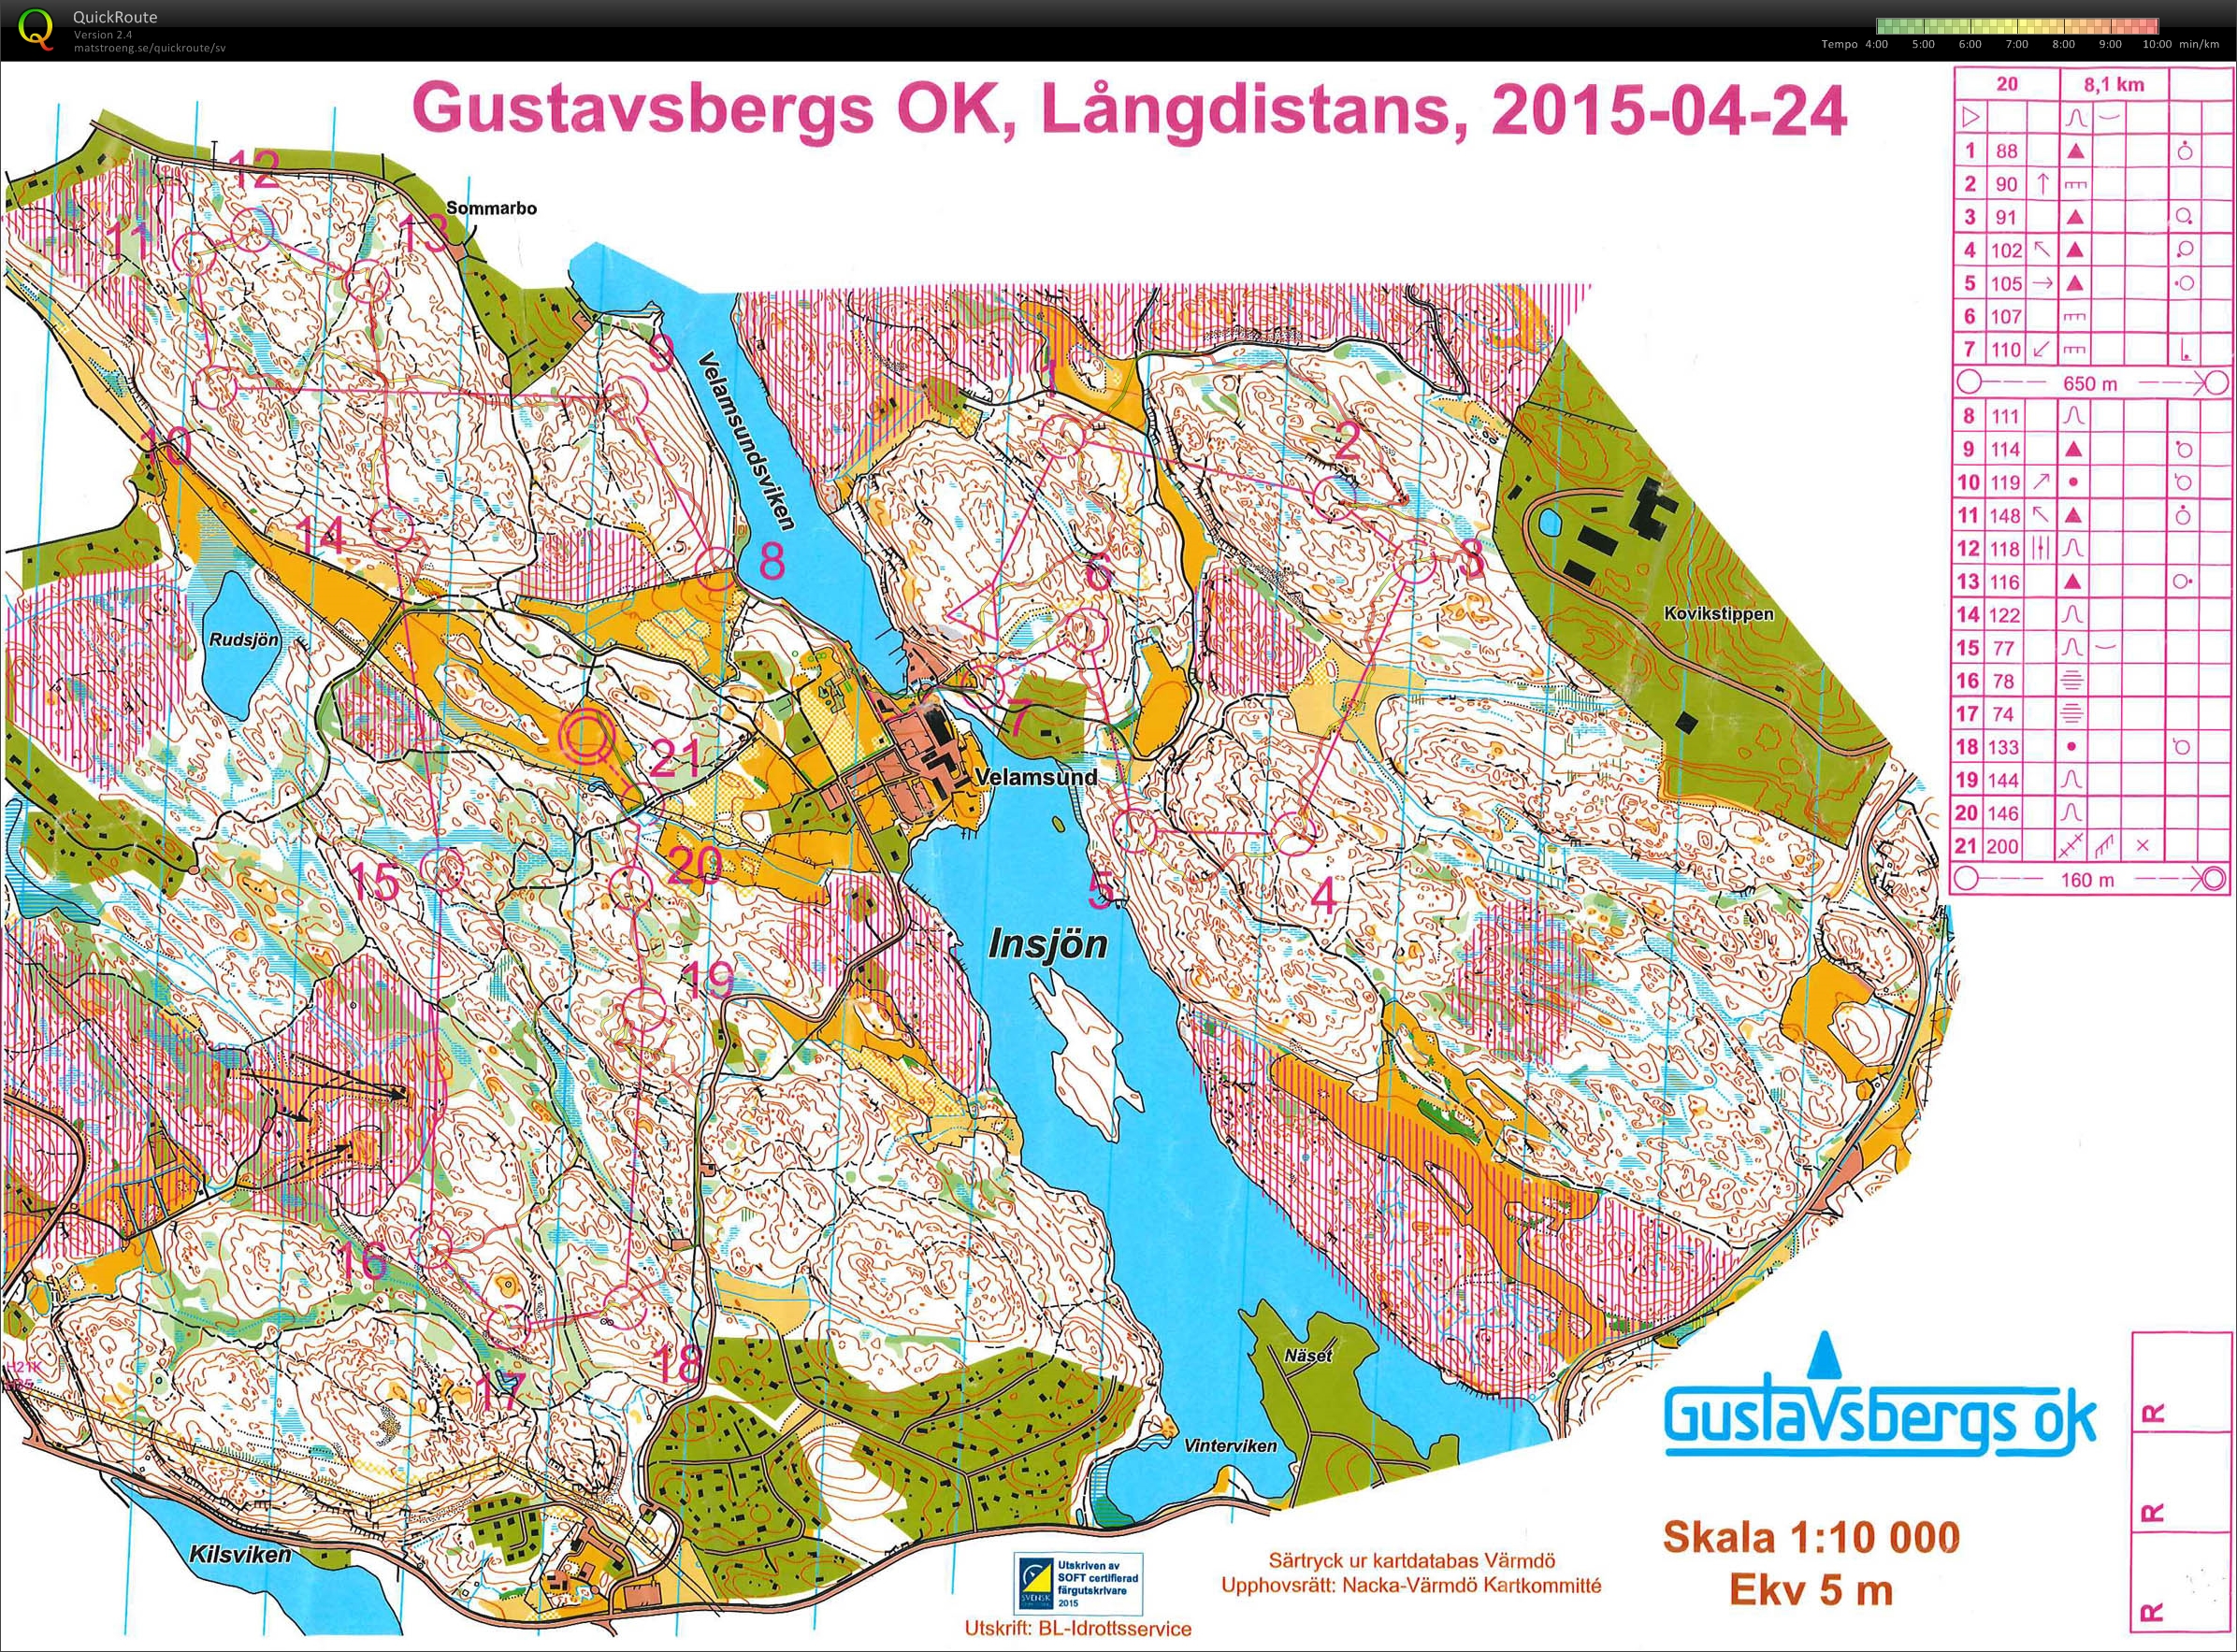 Gustavsbergs OK långdistans (25.04.2015)